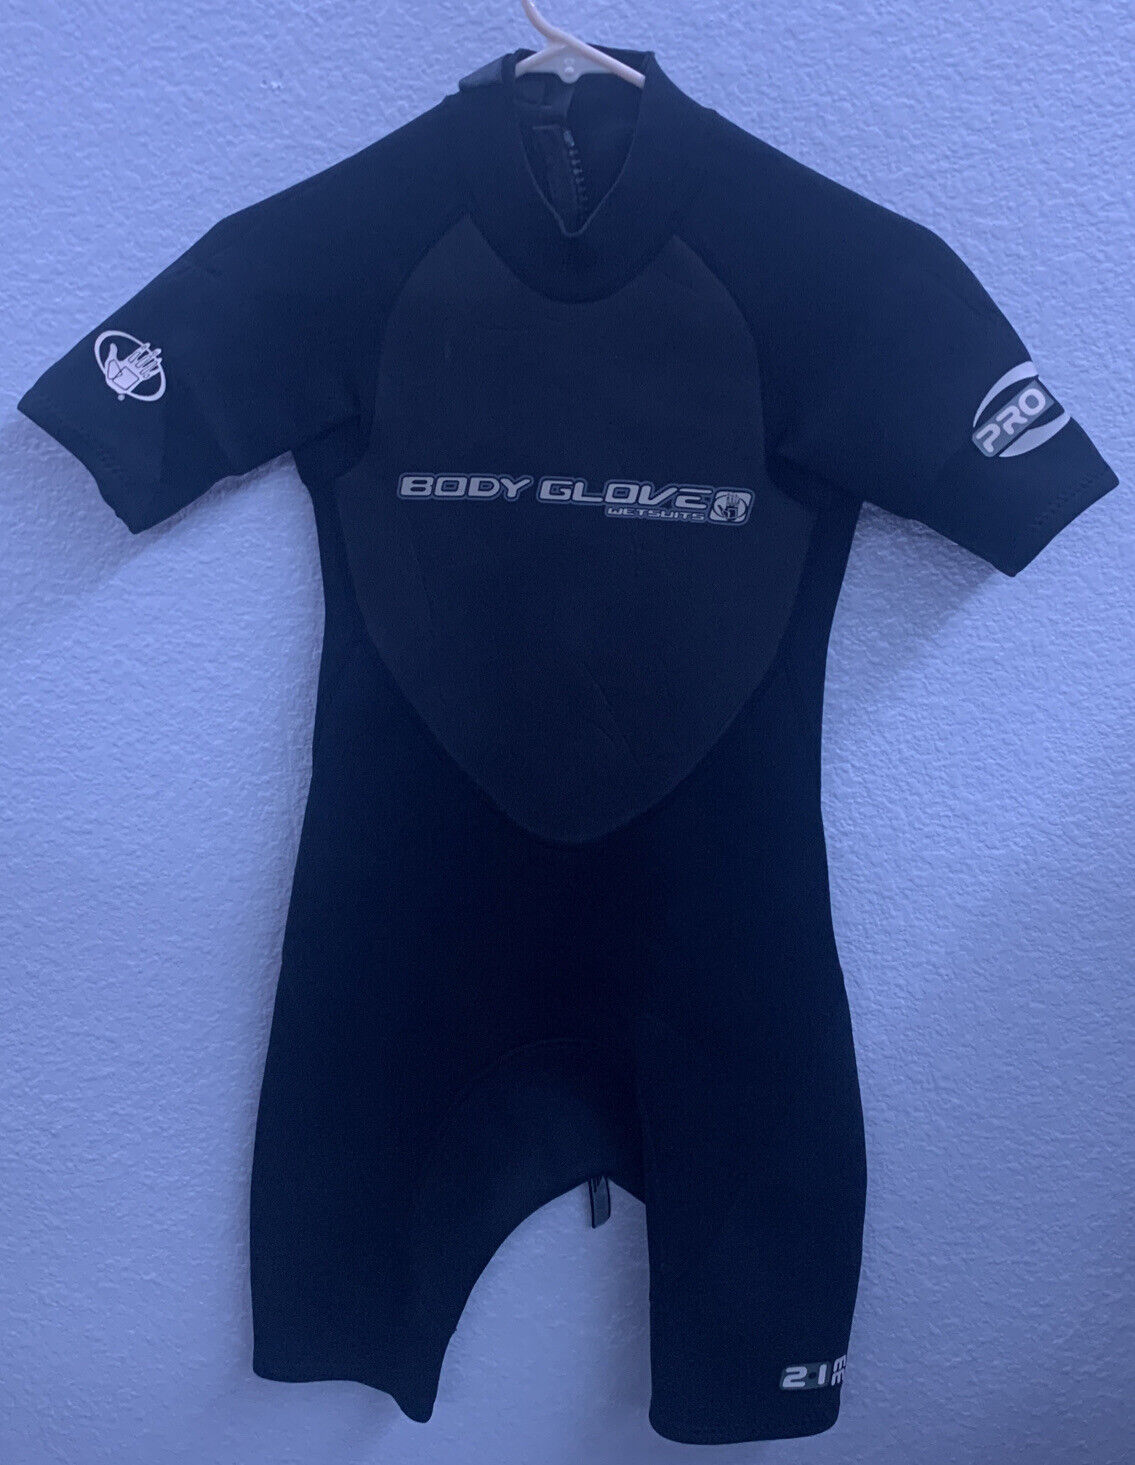 Body Glove Pro 2 Short Shorty 3/4 Black Wetsuit - 2.1 mm - Size Juniors 12